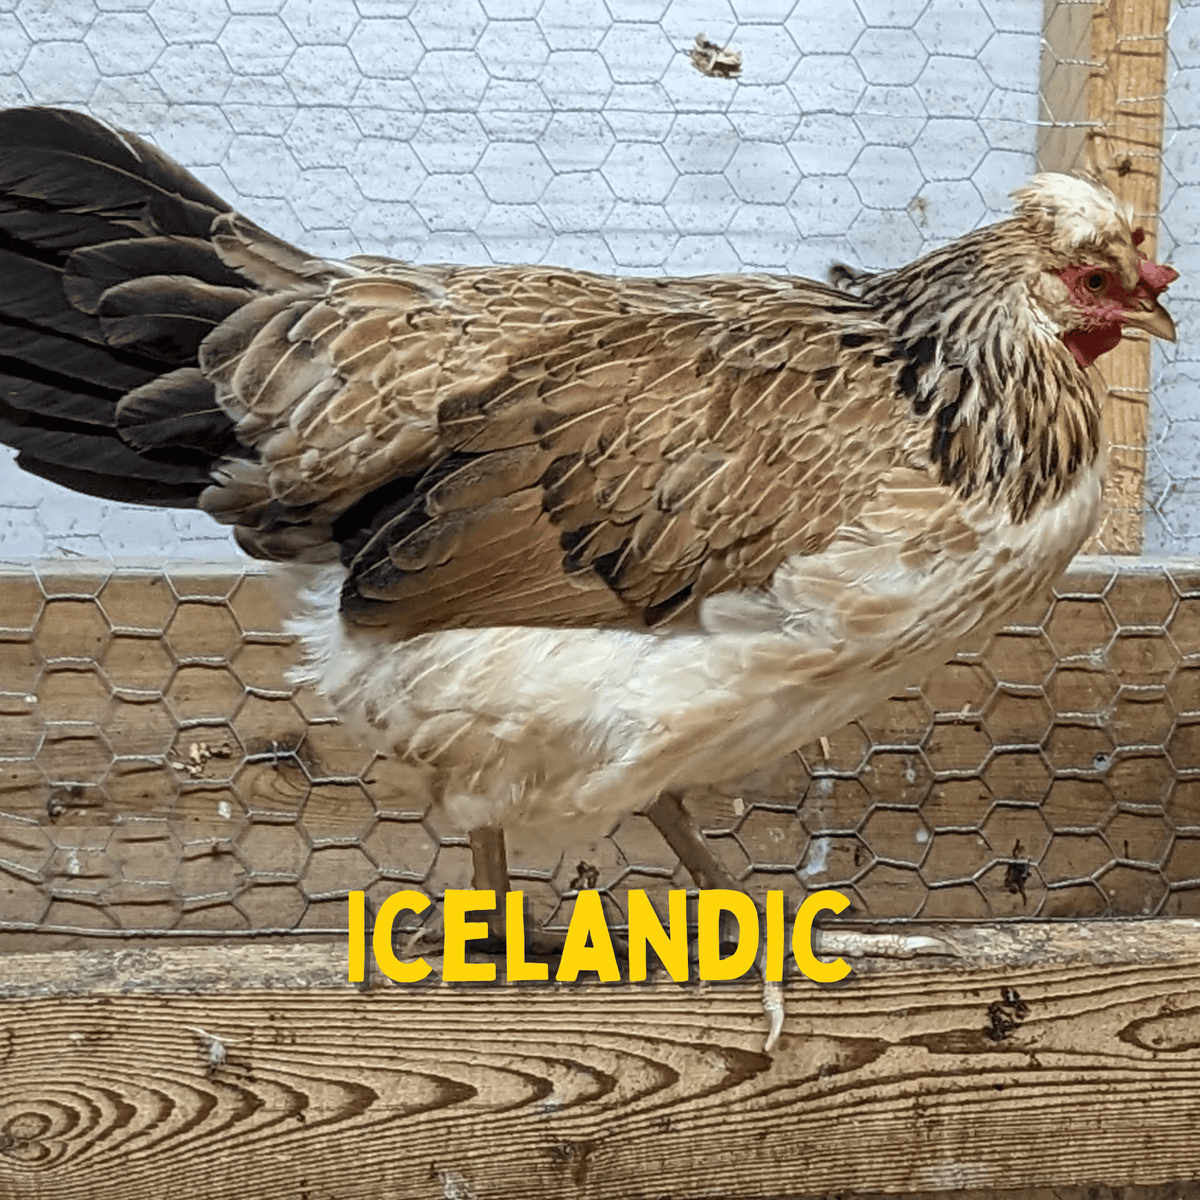 Day Old Icelandic Chicks